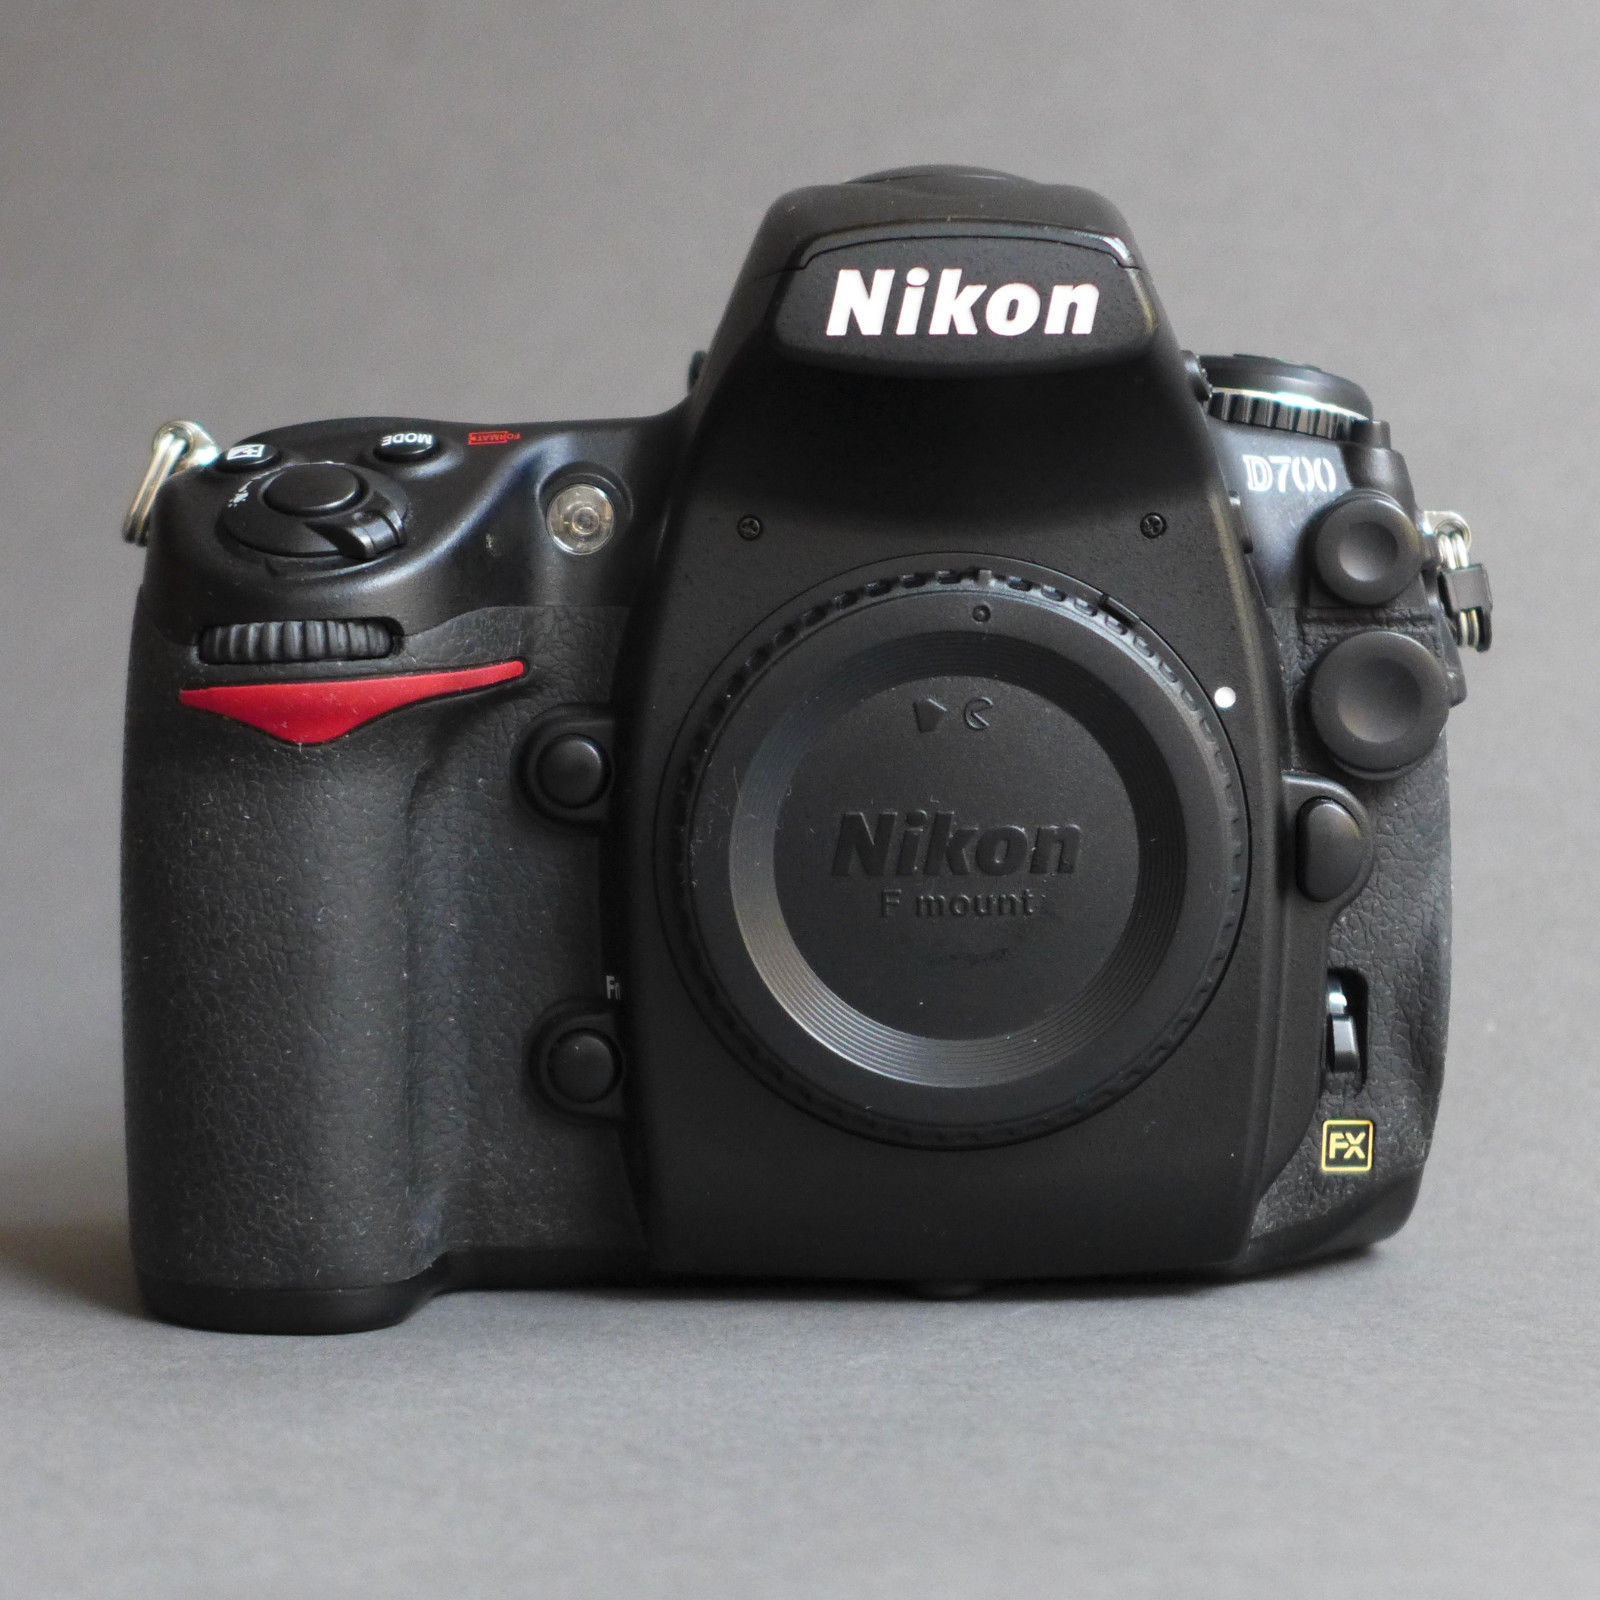 Nikon D700 DSLR Gehäuse (body), nur 16525 Auslösungen, 16525 clicks, OVP, boxed